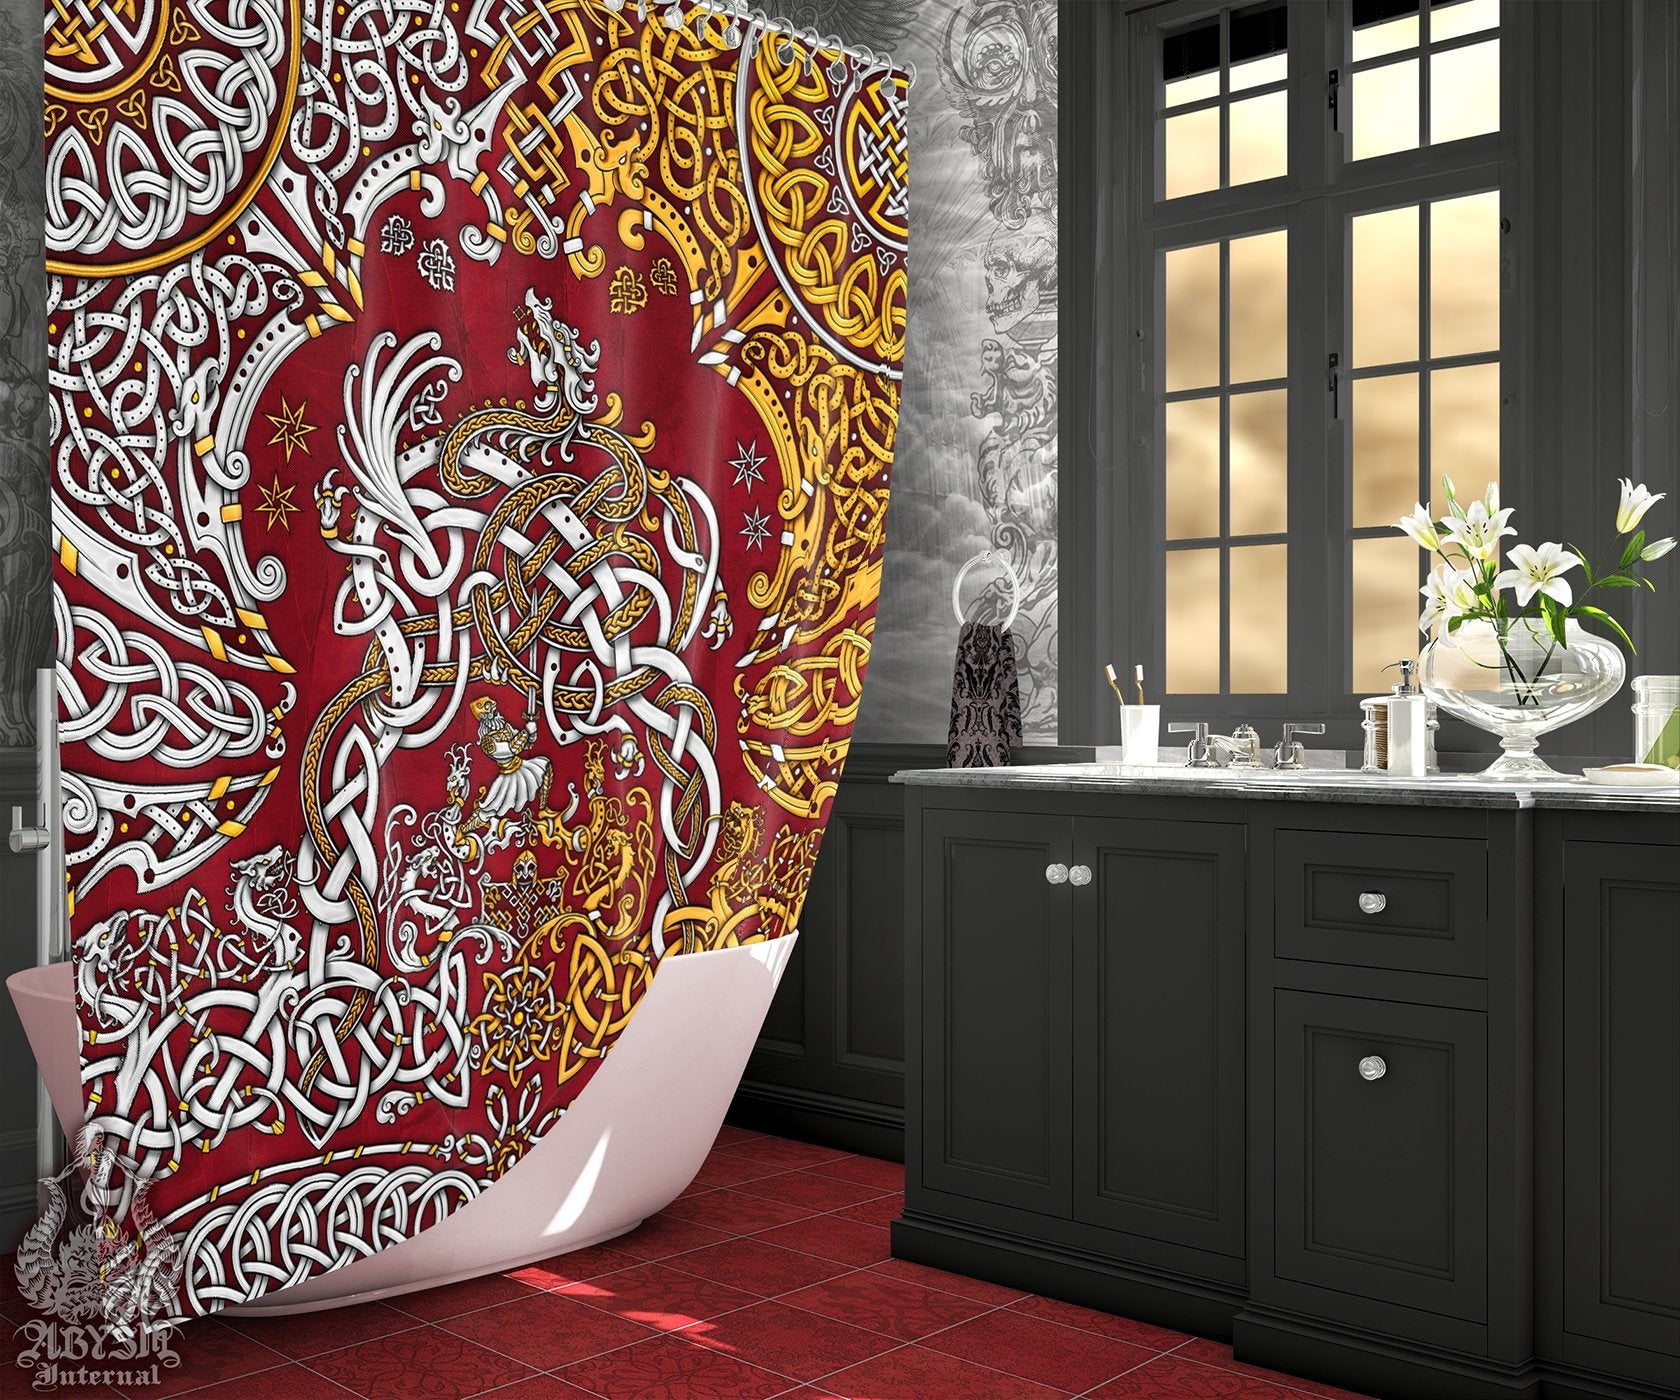 Viking Shower Curtain, Bathroom Decor, Nordic & Norse Art, Dragon Fafnir - Gold Red - Abysm Internal